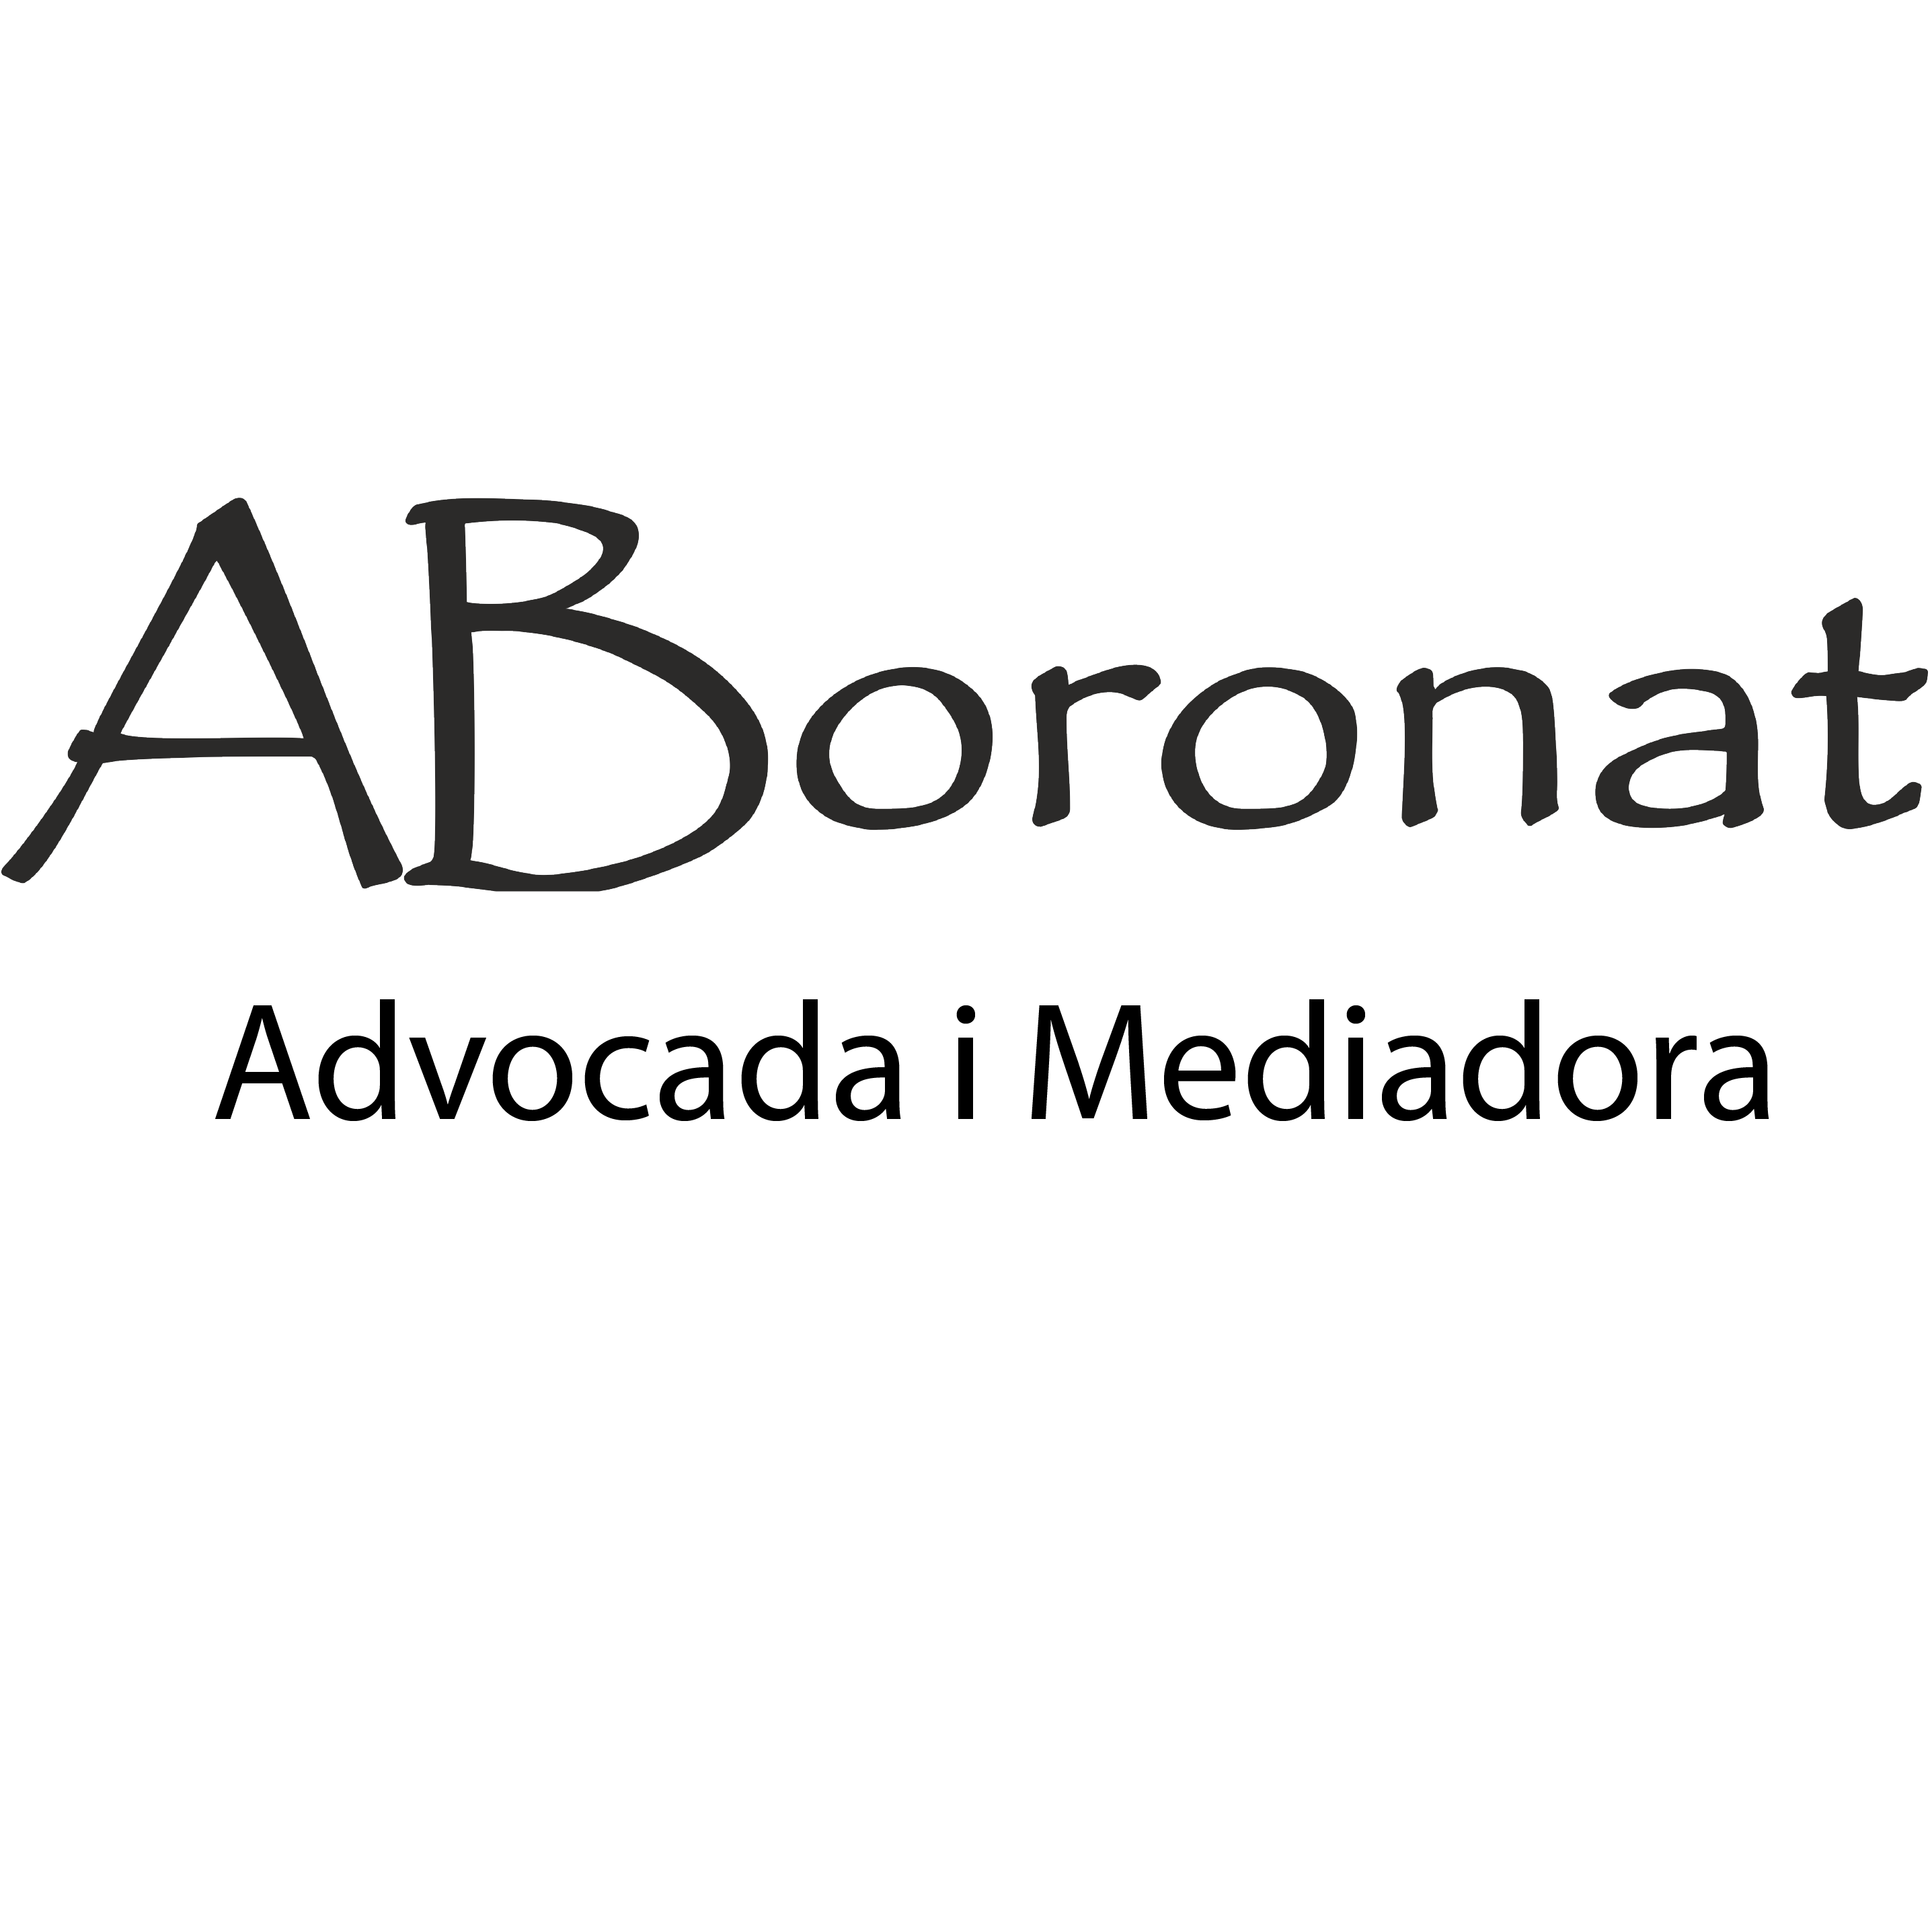 Ana Boronat Abogada y Mediadora Logo